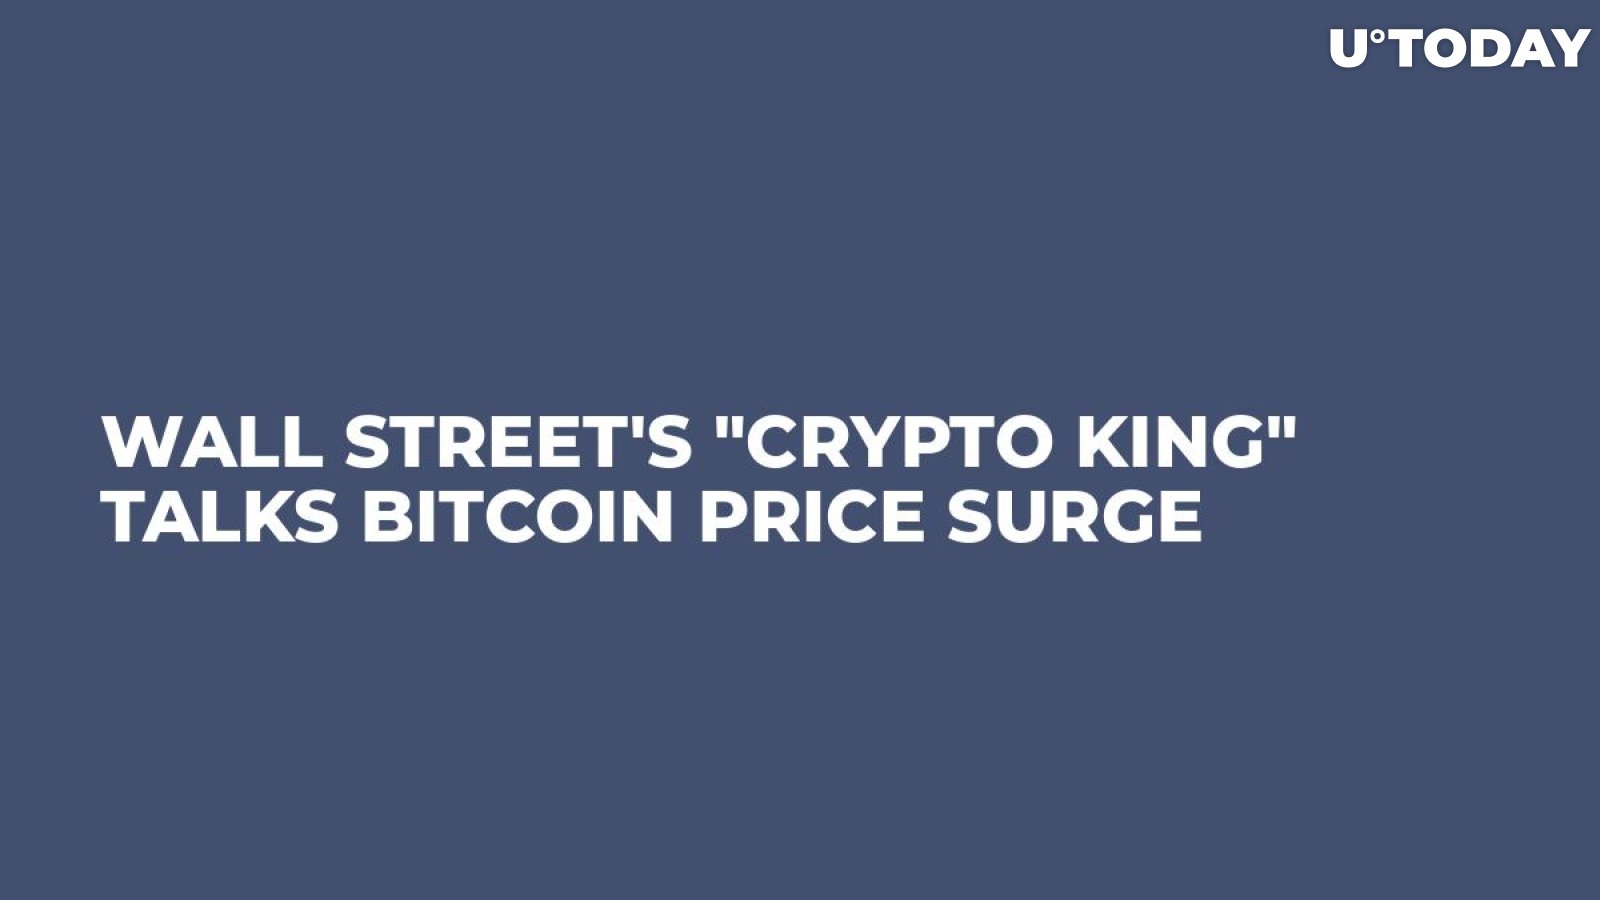 Wall Street's "Crypto King" Talks Bitcoin Price Surge